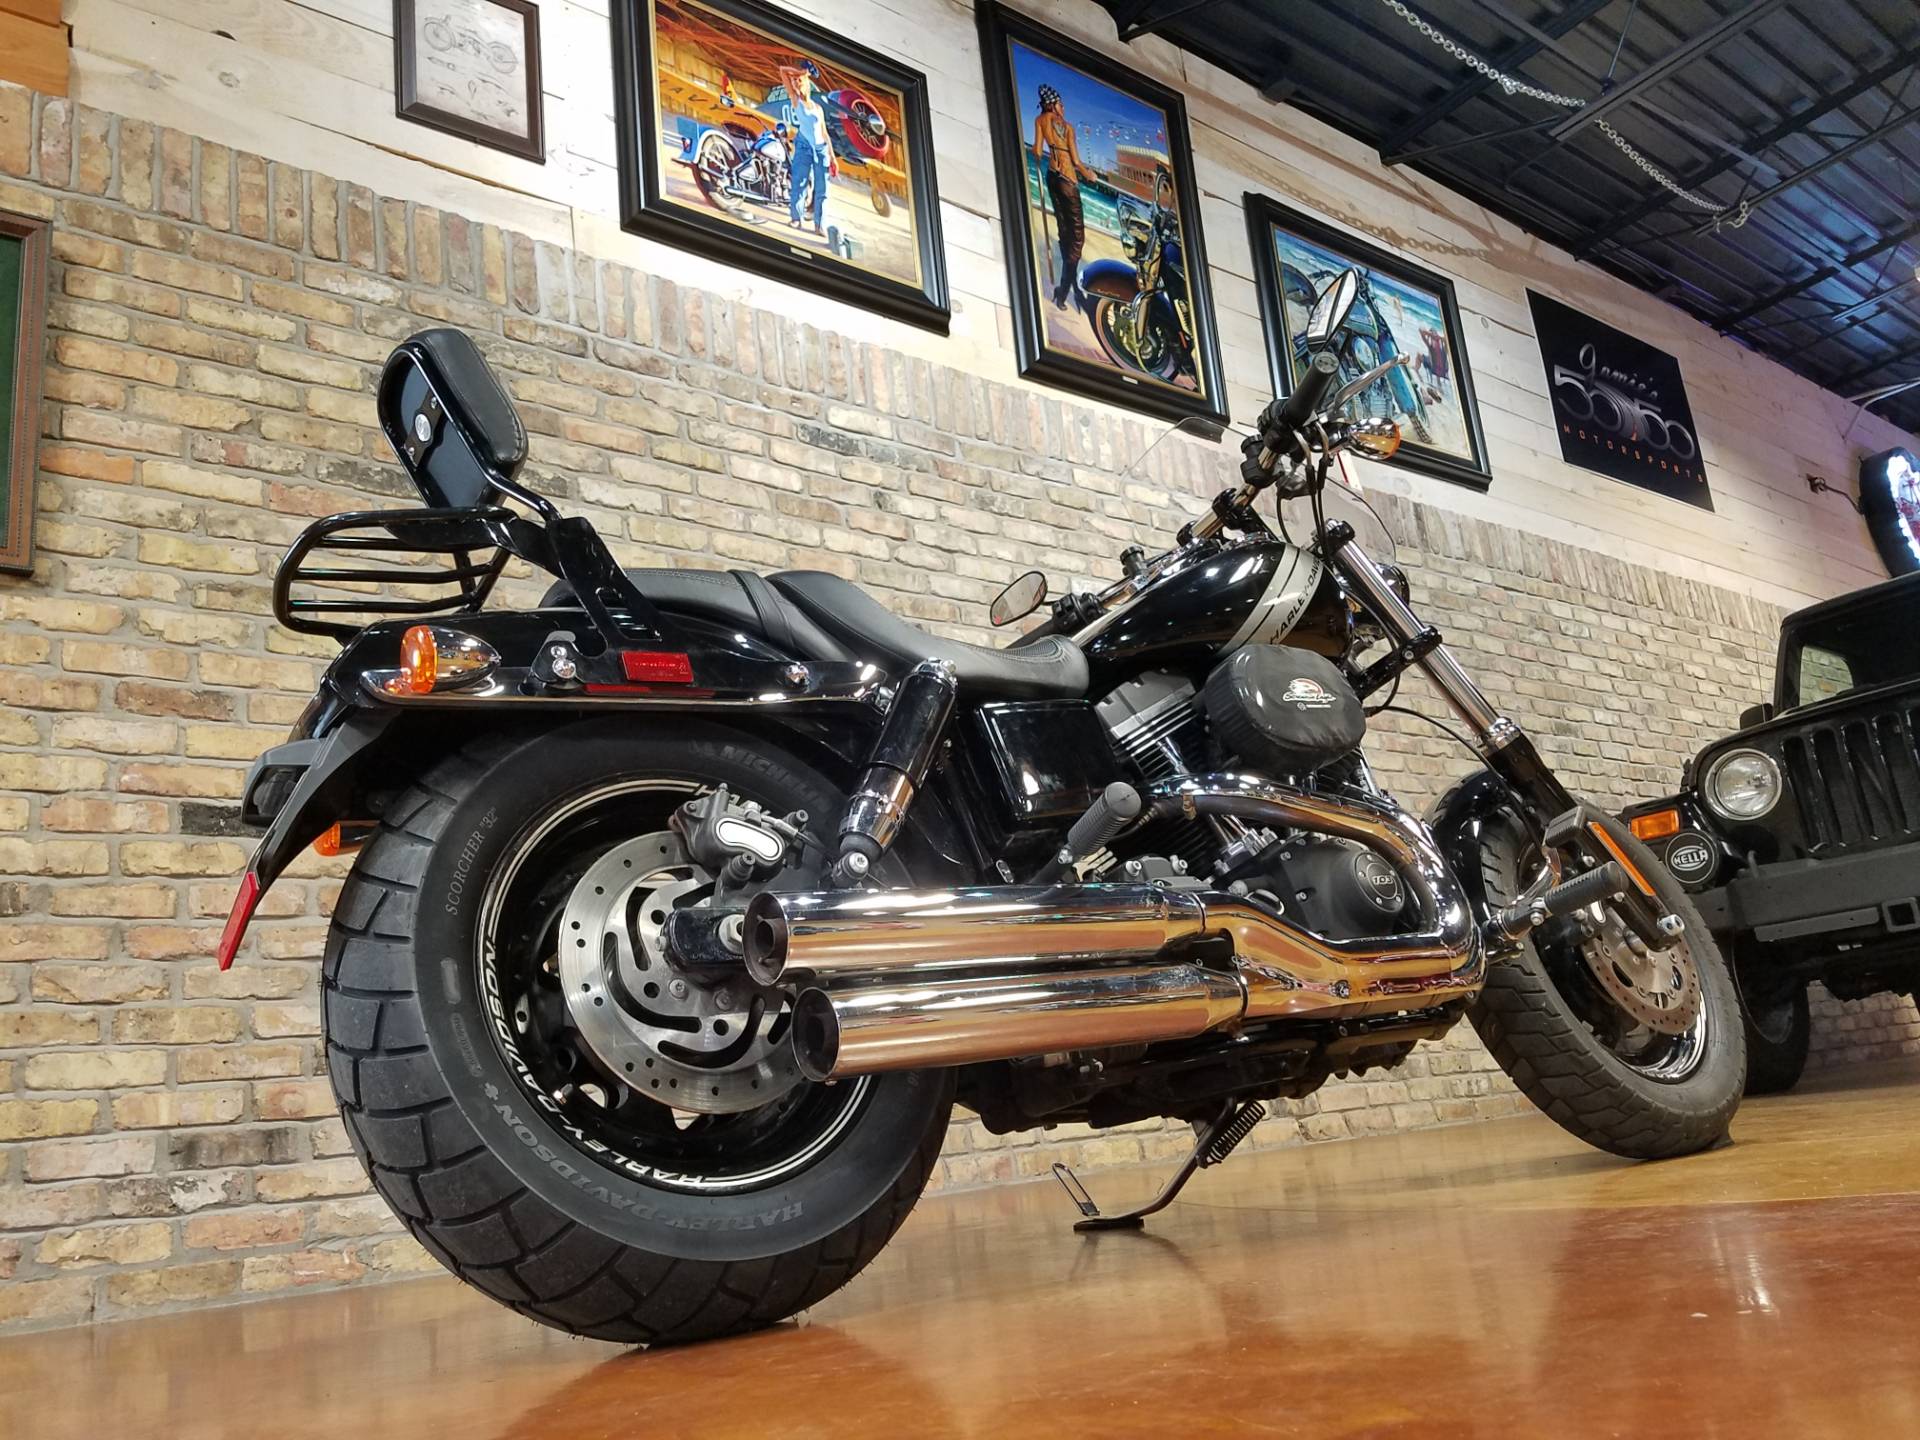 2014 Harley-Davidson Dyna® Fat Bob® in Big Bend, Wisconsin - Photo 4